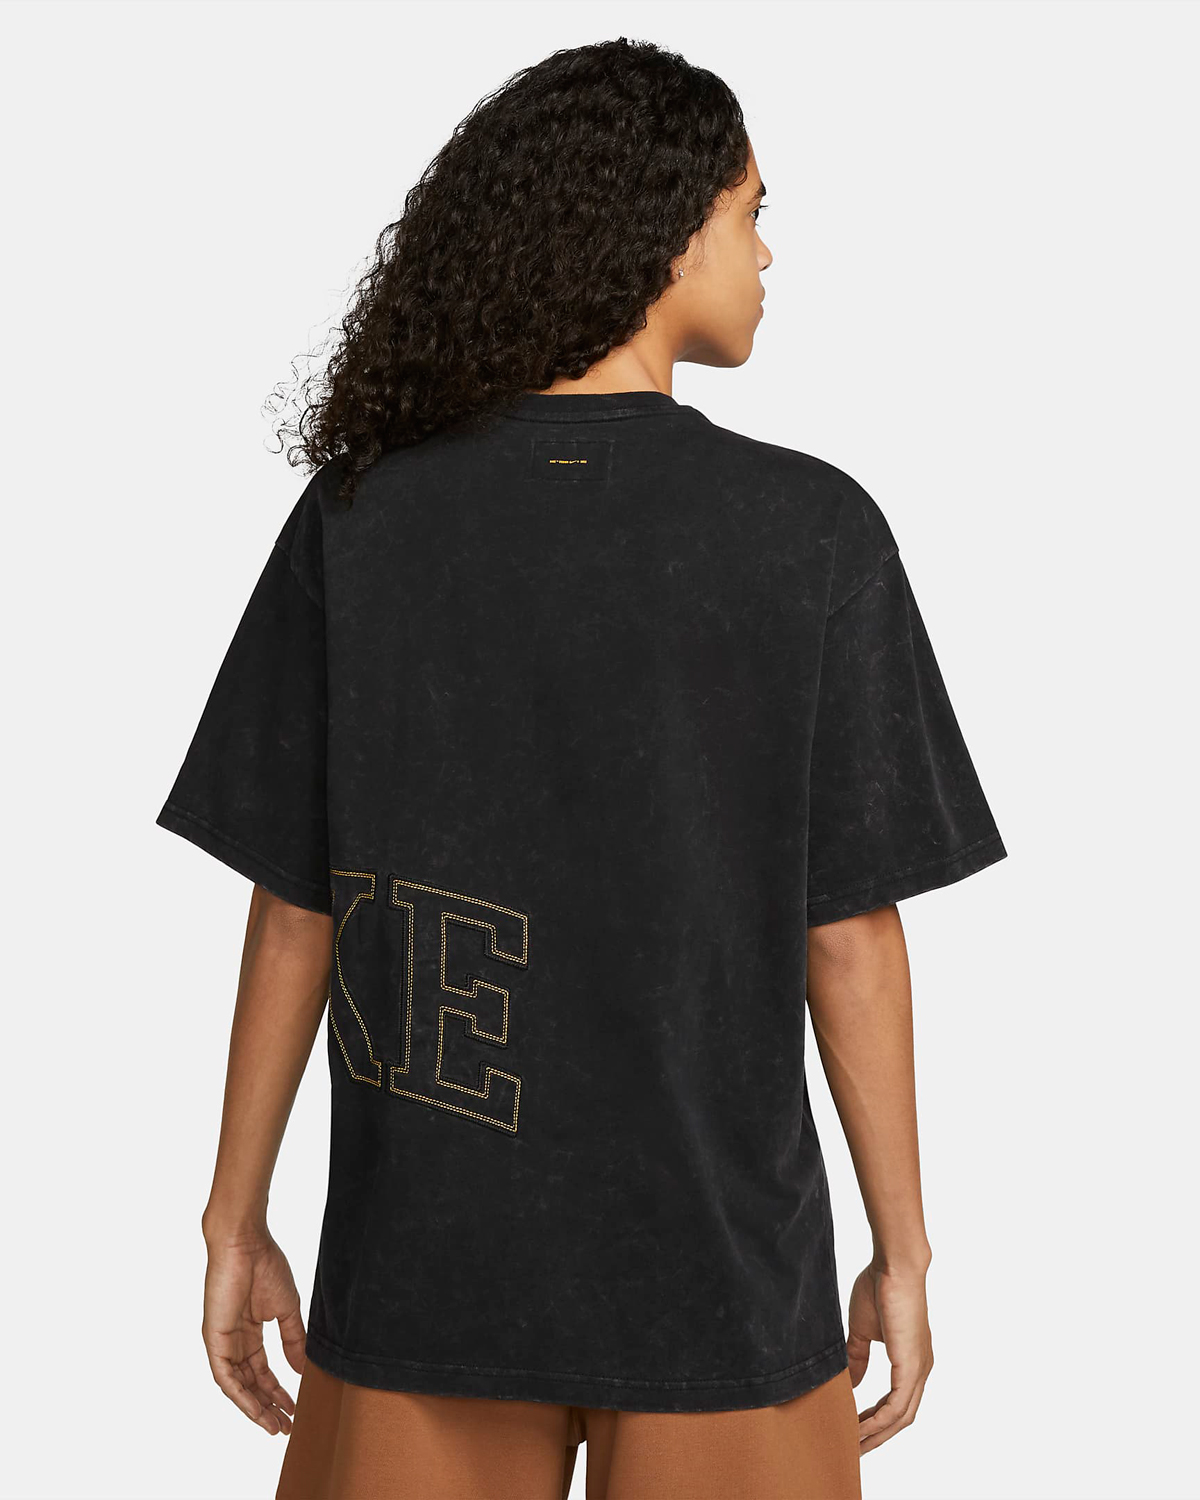 Nike-Fadeaway-T-Shirt-Black-University-Gold-2